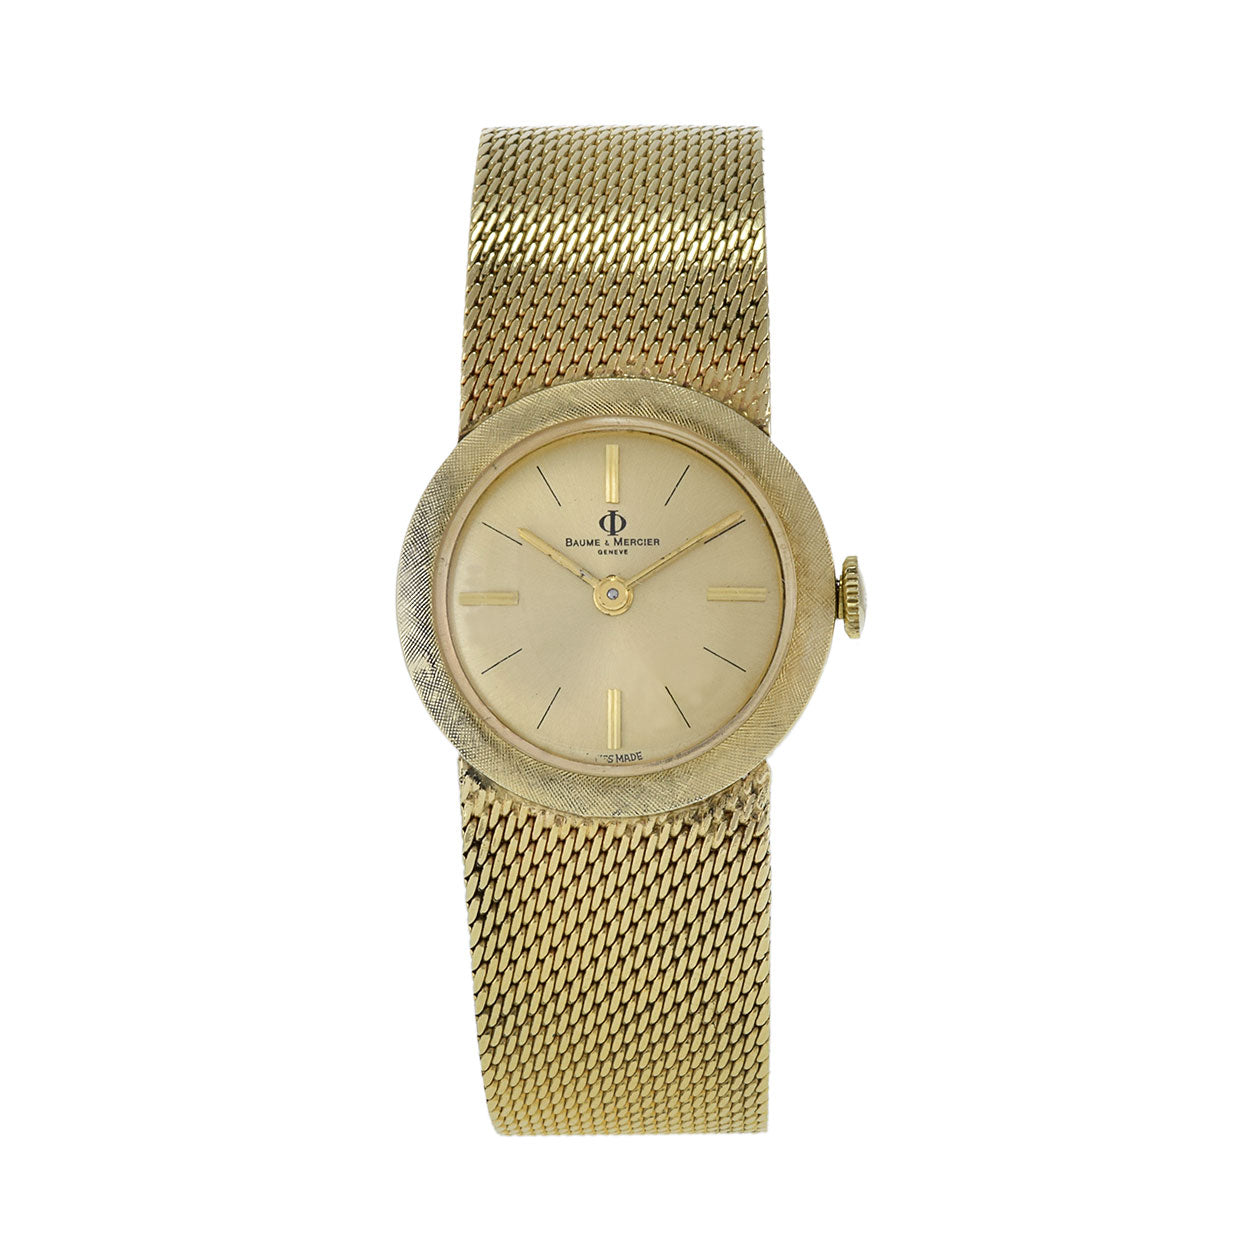 Baume & Mercier 1960's 14kt Gold Bracelet Watch